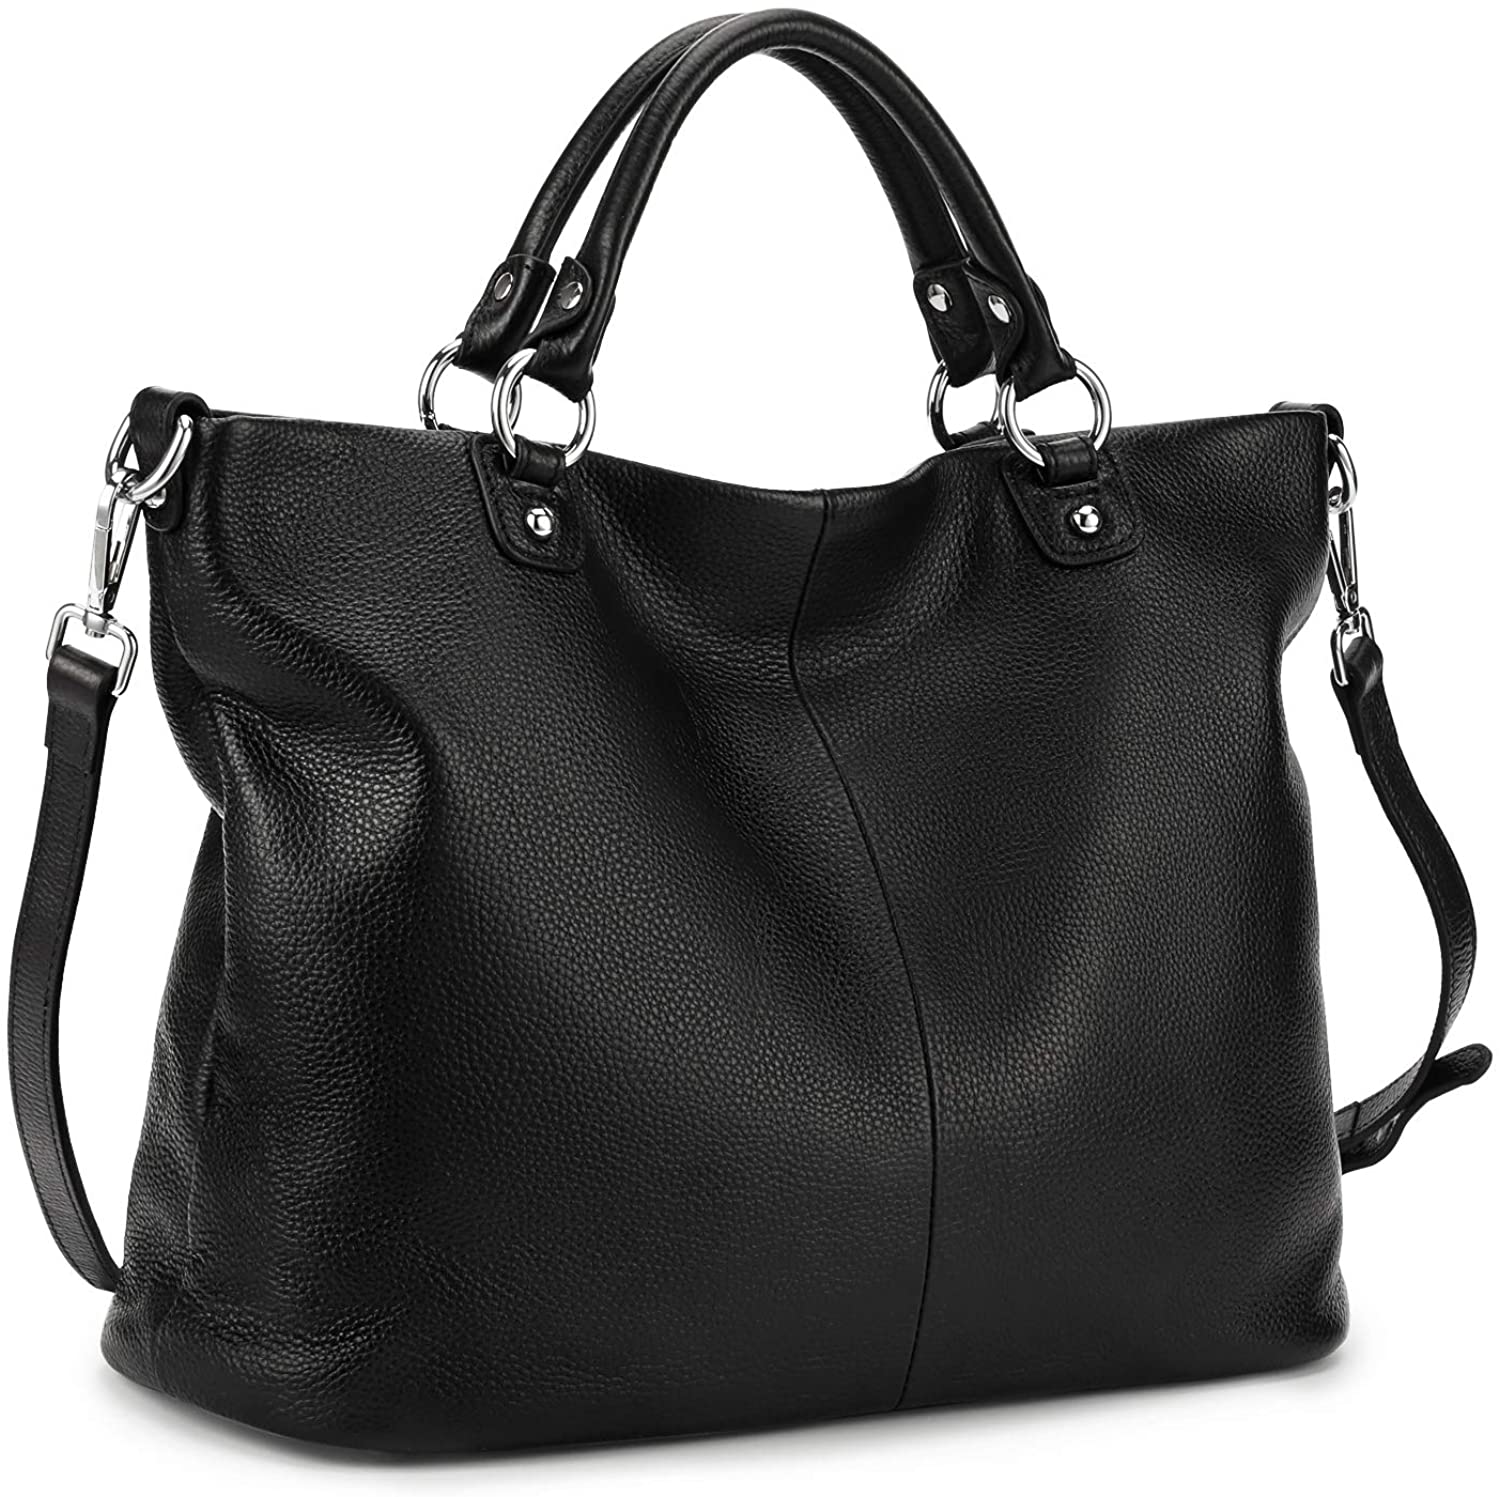 Kattee Women S Soft Genuine Leather Tote Bag Top Satchel Purses And Handbags Ebay